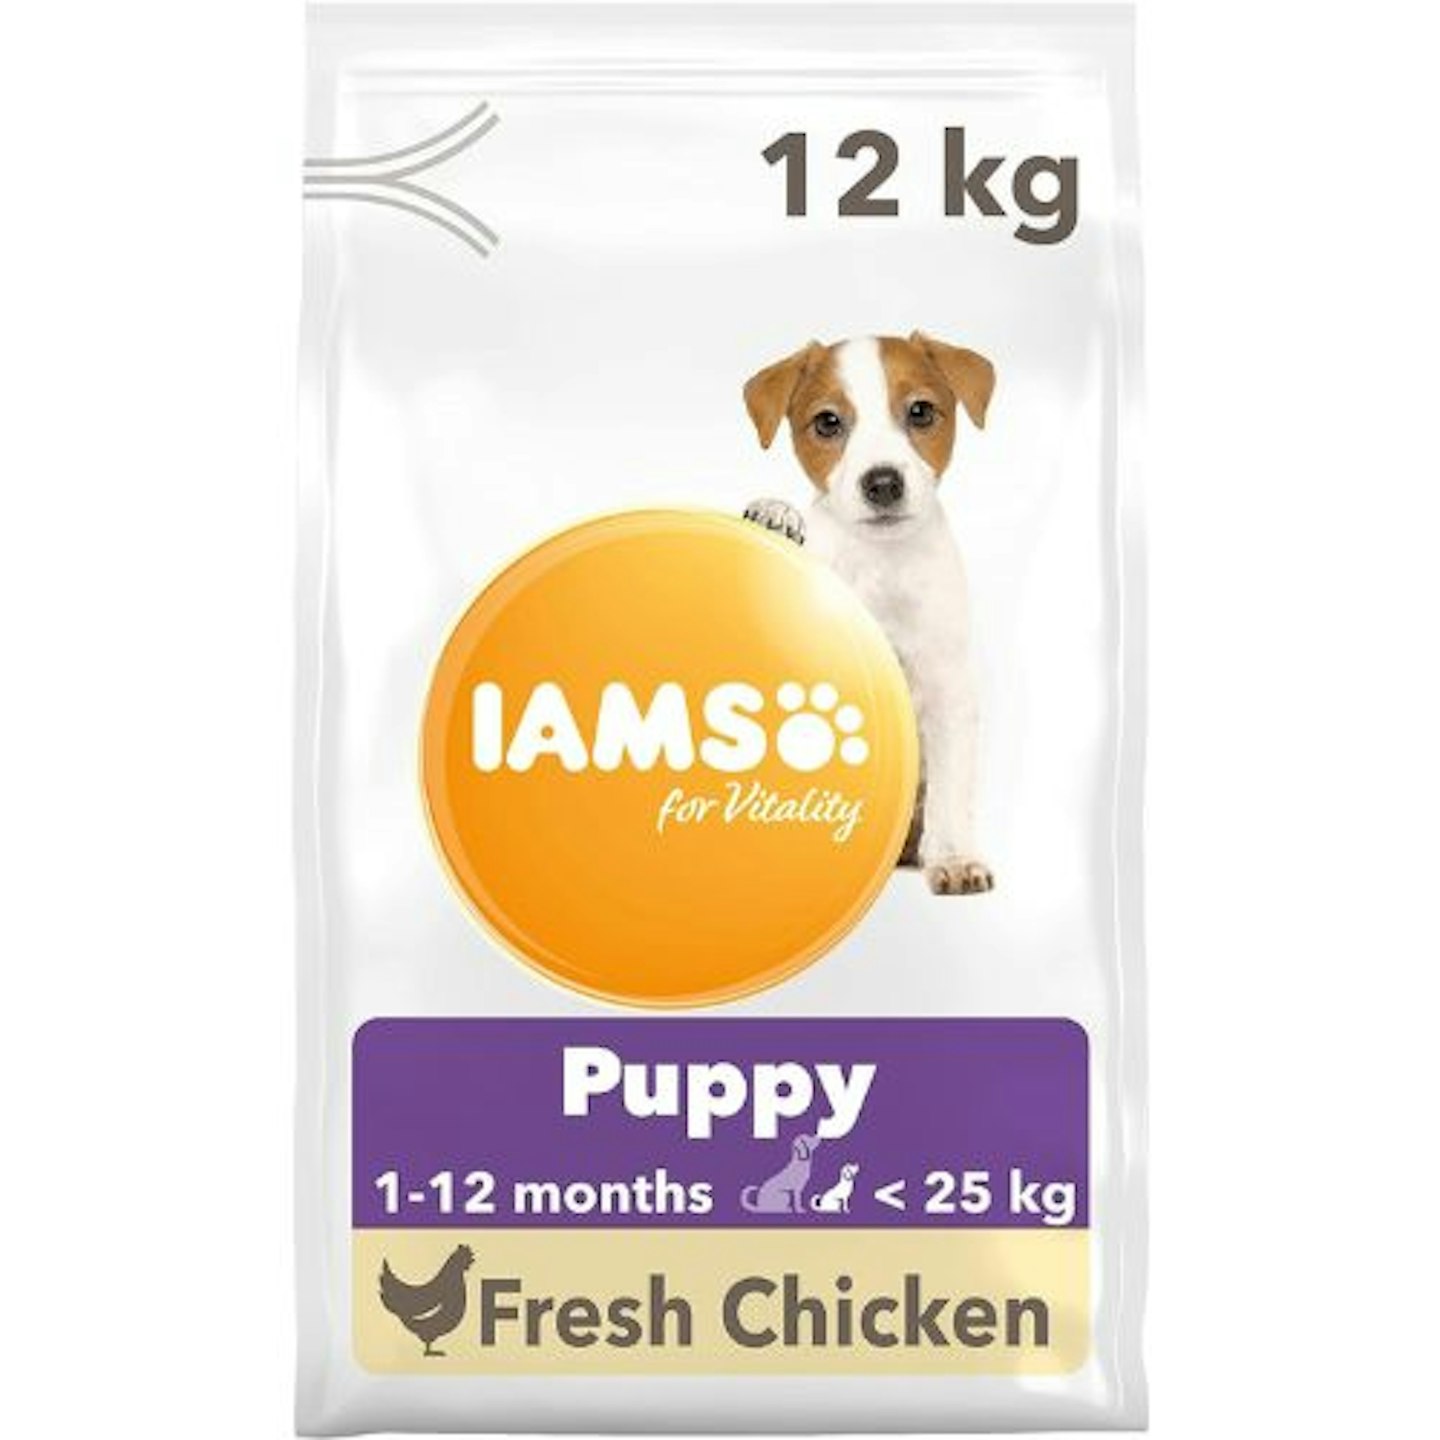 IAMS Small to Medium Puppy & Junior Dry Dog Food, 12kg